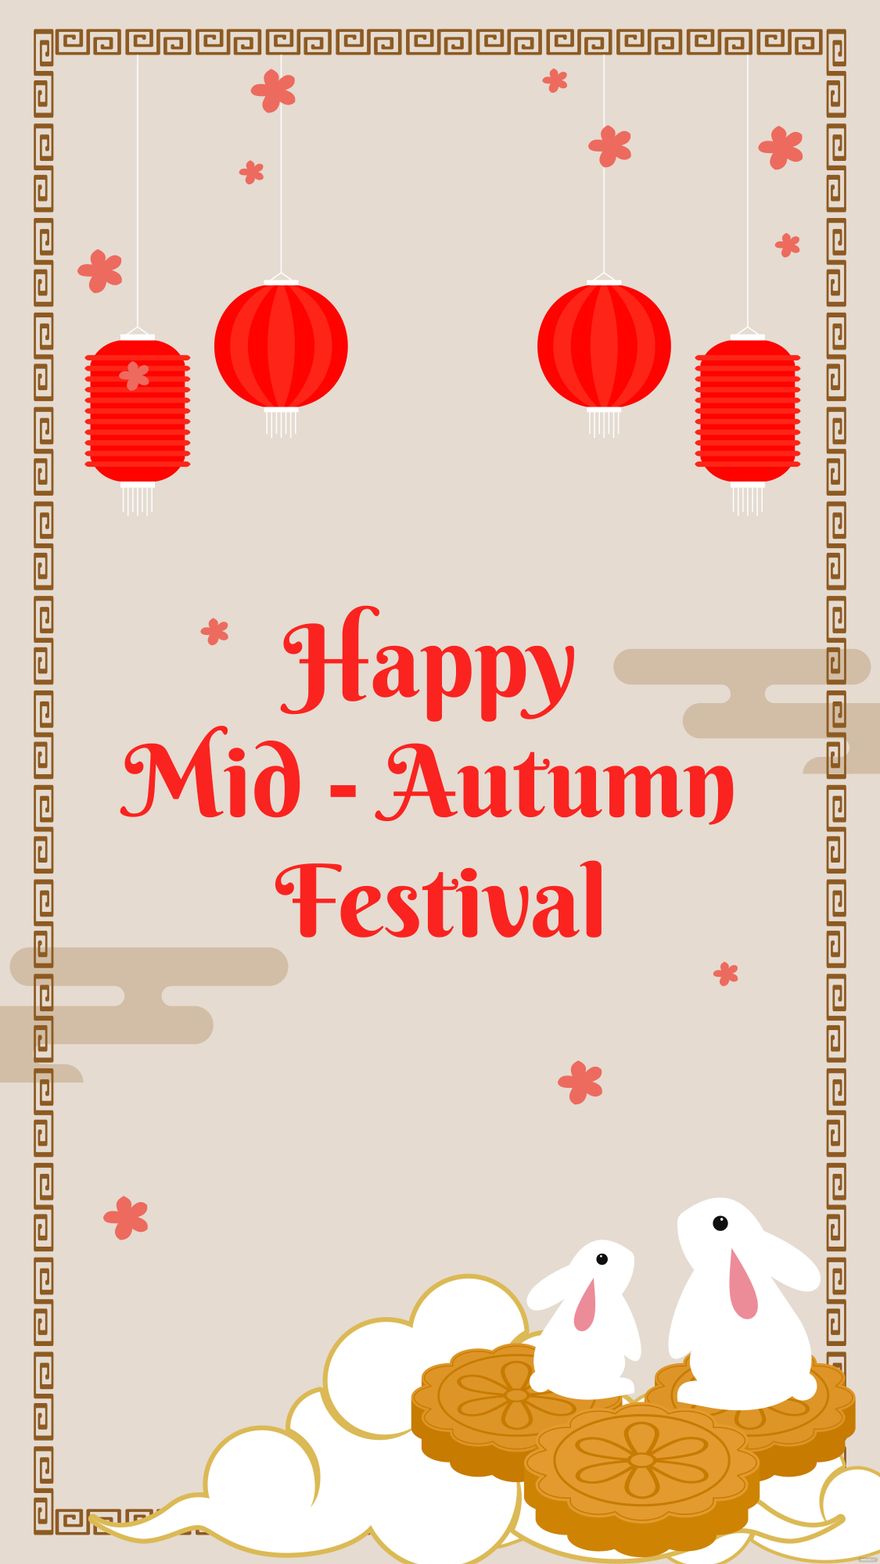 Mid-Autumn Festival iPhone background